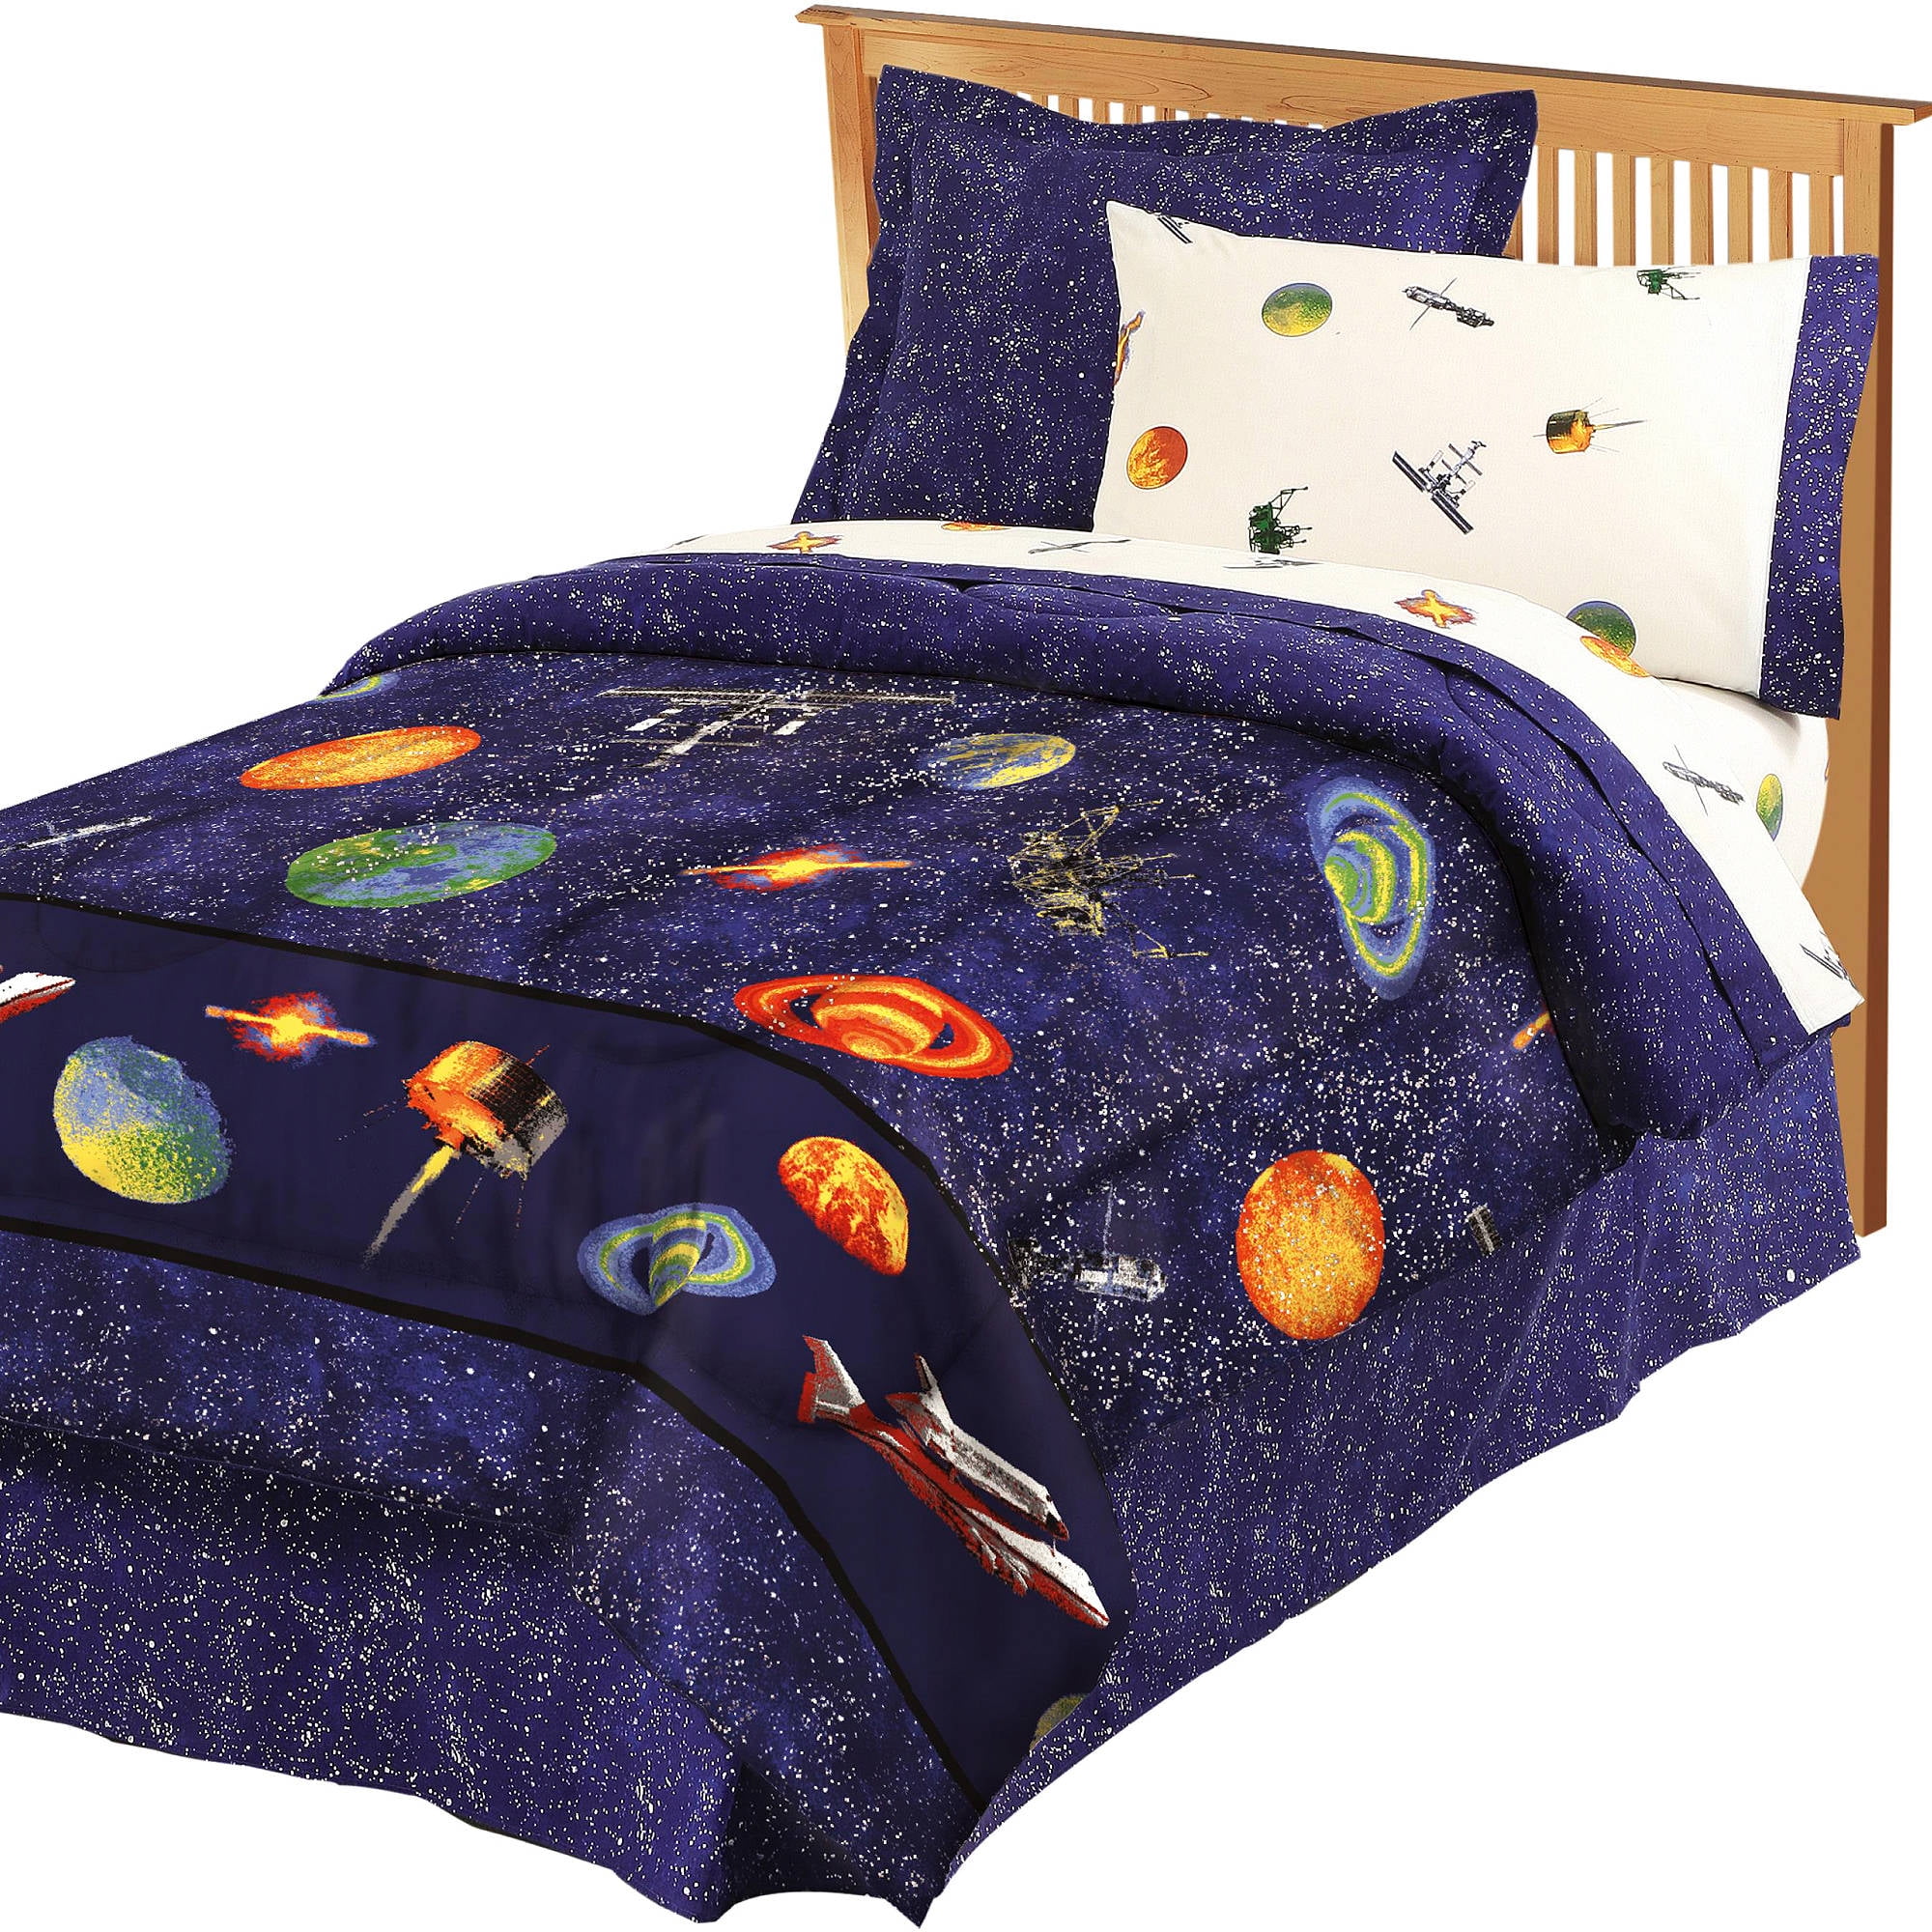 Dream Factory Outer Space Twin 6 Piece Comforter Set, Cotton/Polyester,  Dark Blue, Orange, Multi